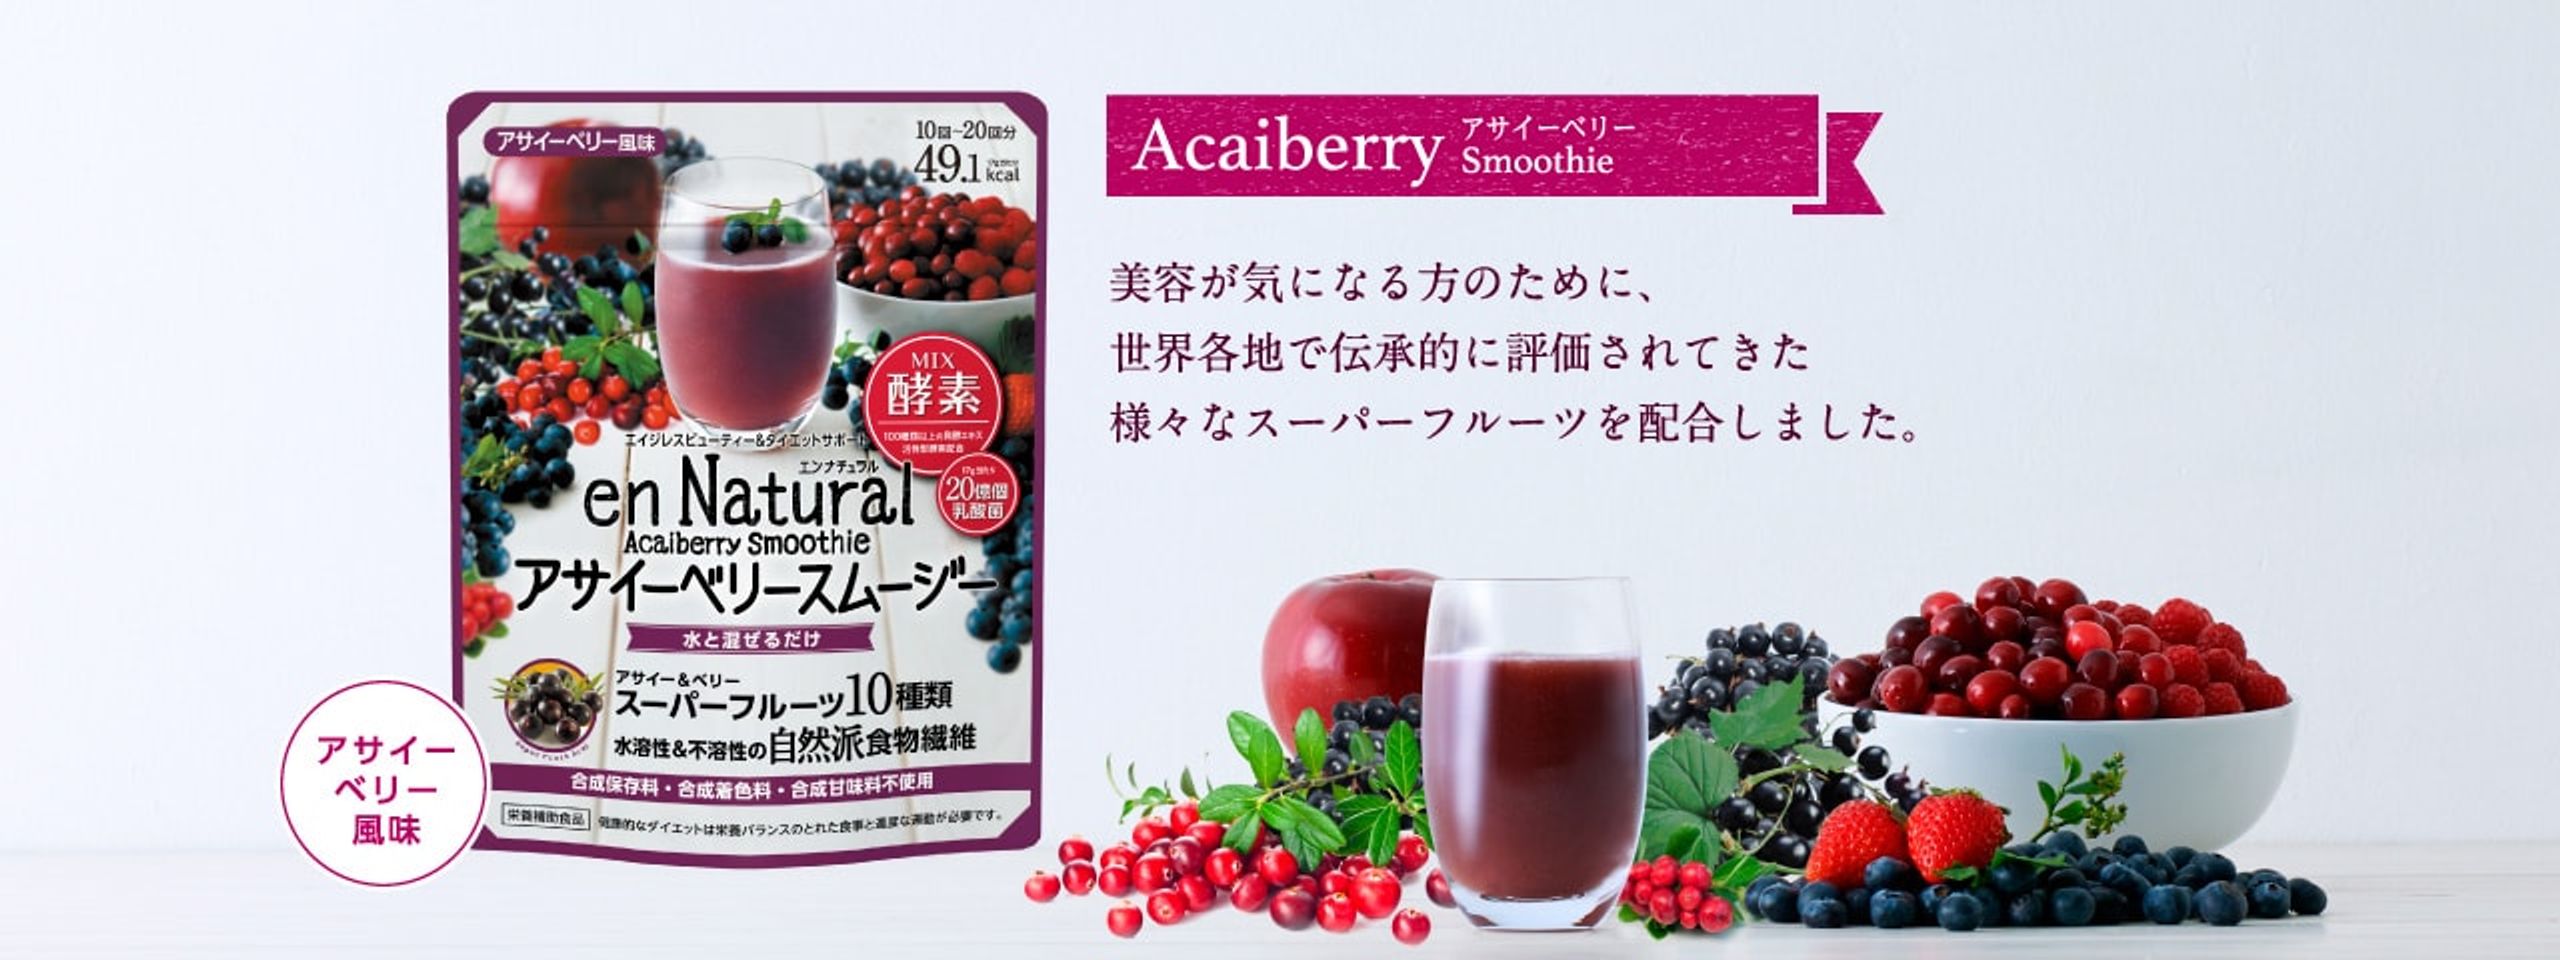 Bột sinh tố rau củ Acaiberry smoothie giảm cân Nhật Bản 1